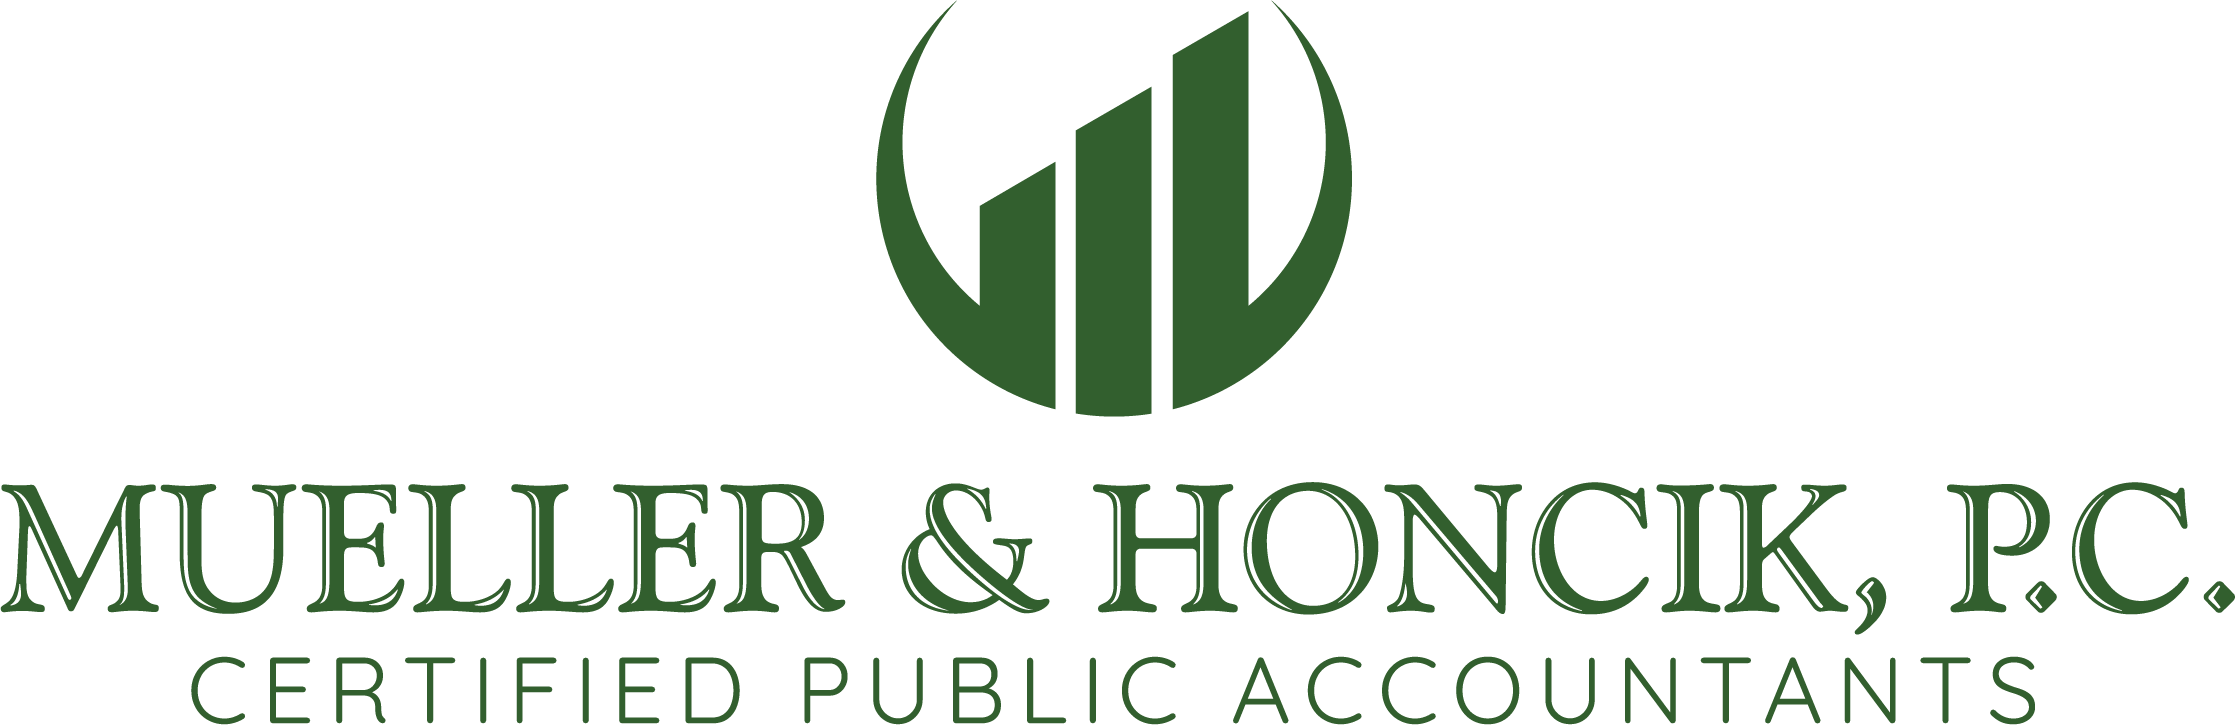 Mueller & Honcik, P.C. logo